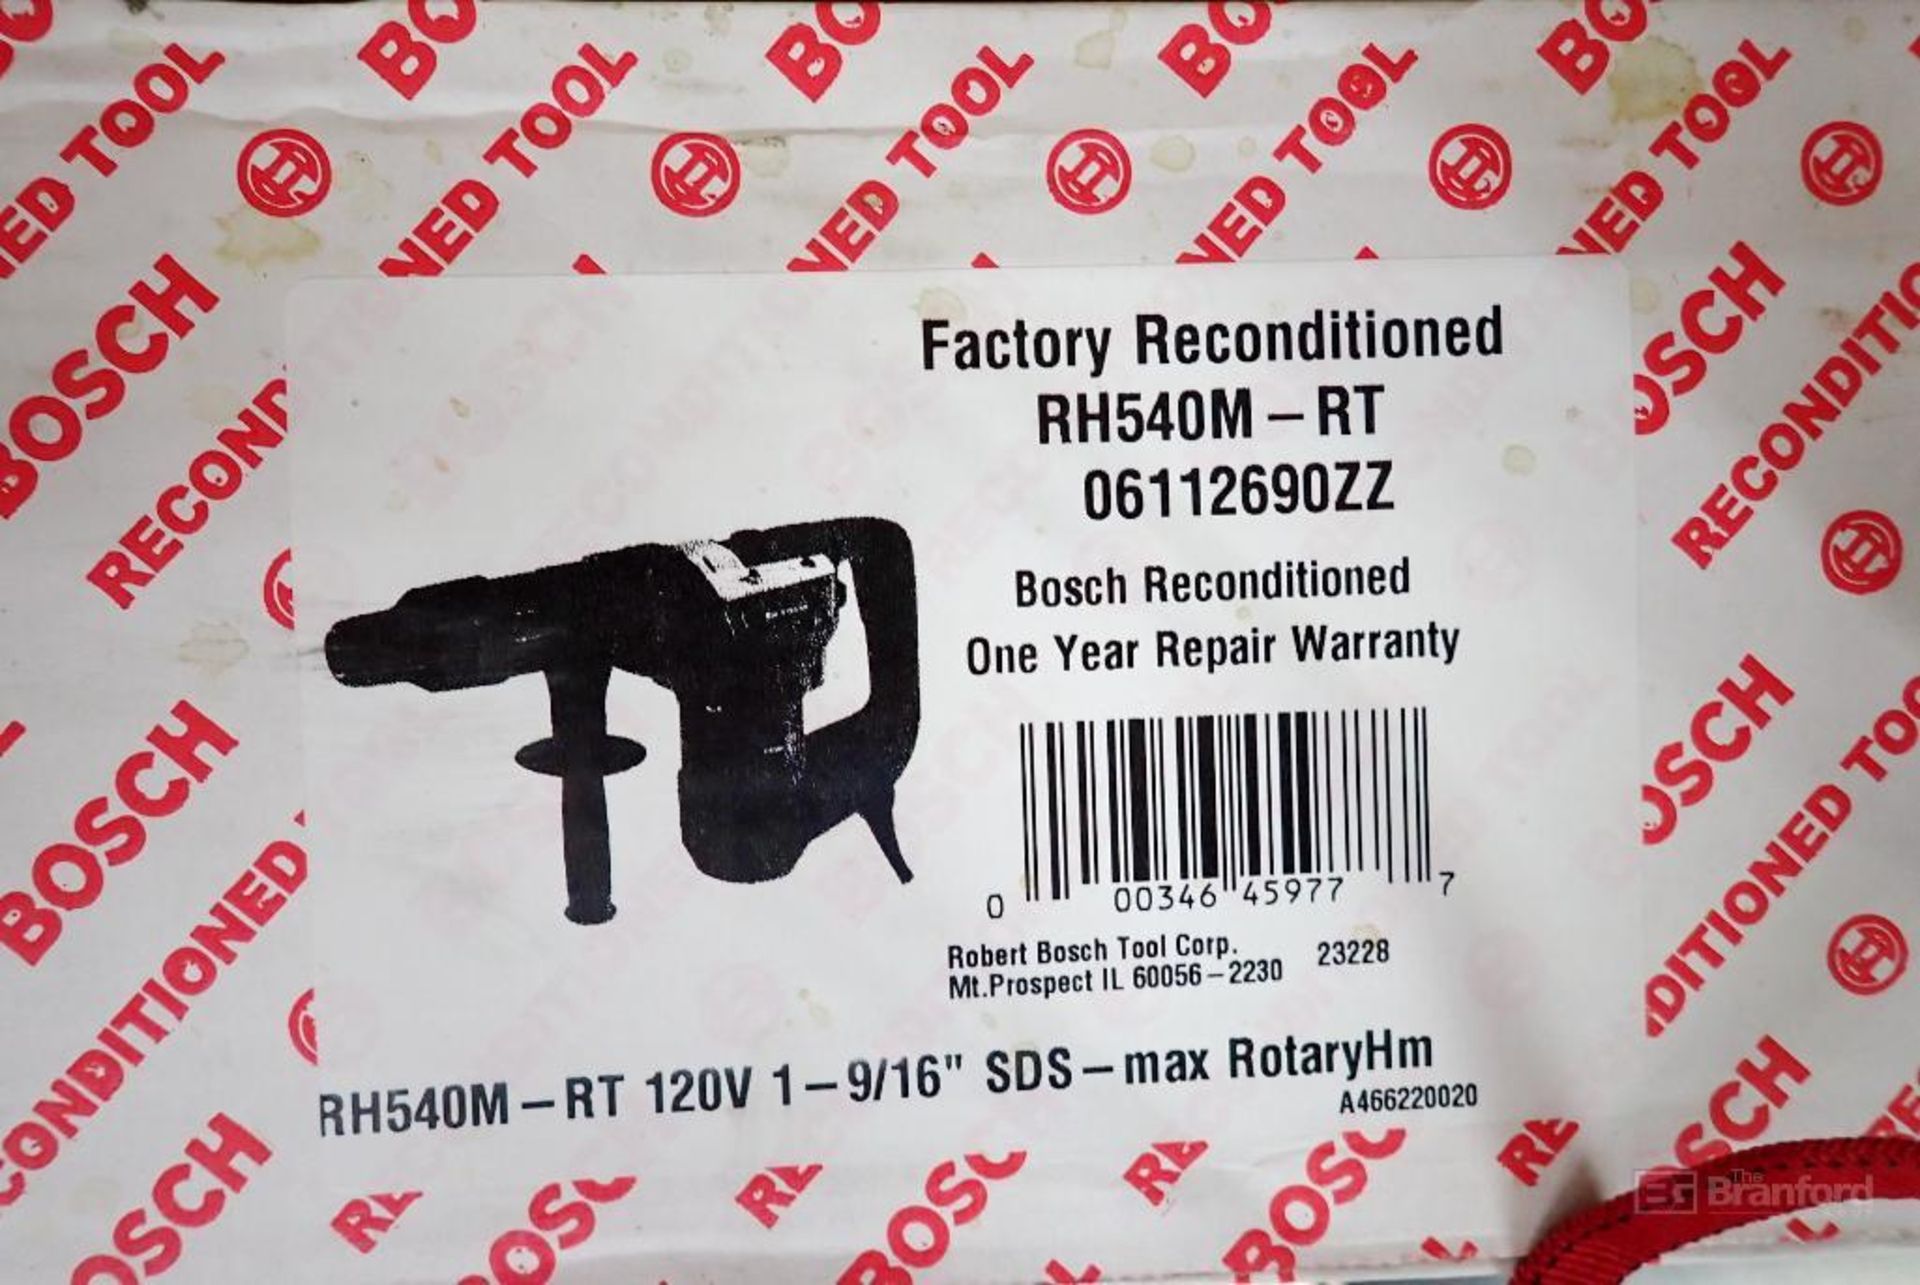 Bosch RH540M-RT BoschHammer Rotary Hammer - Image 5 of 9